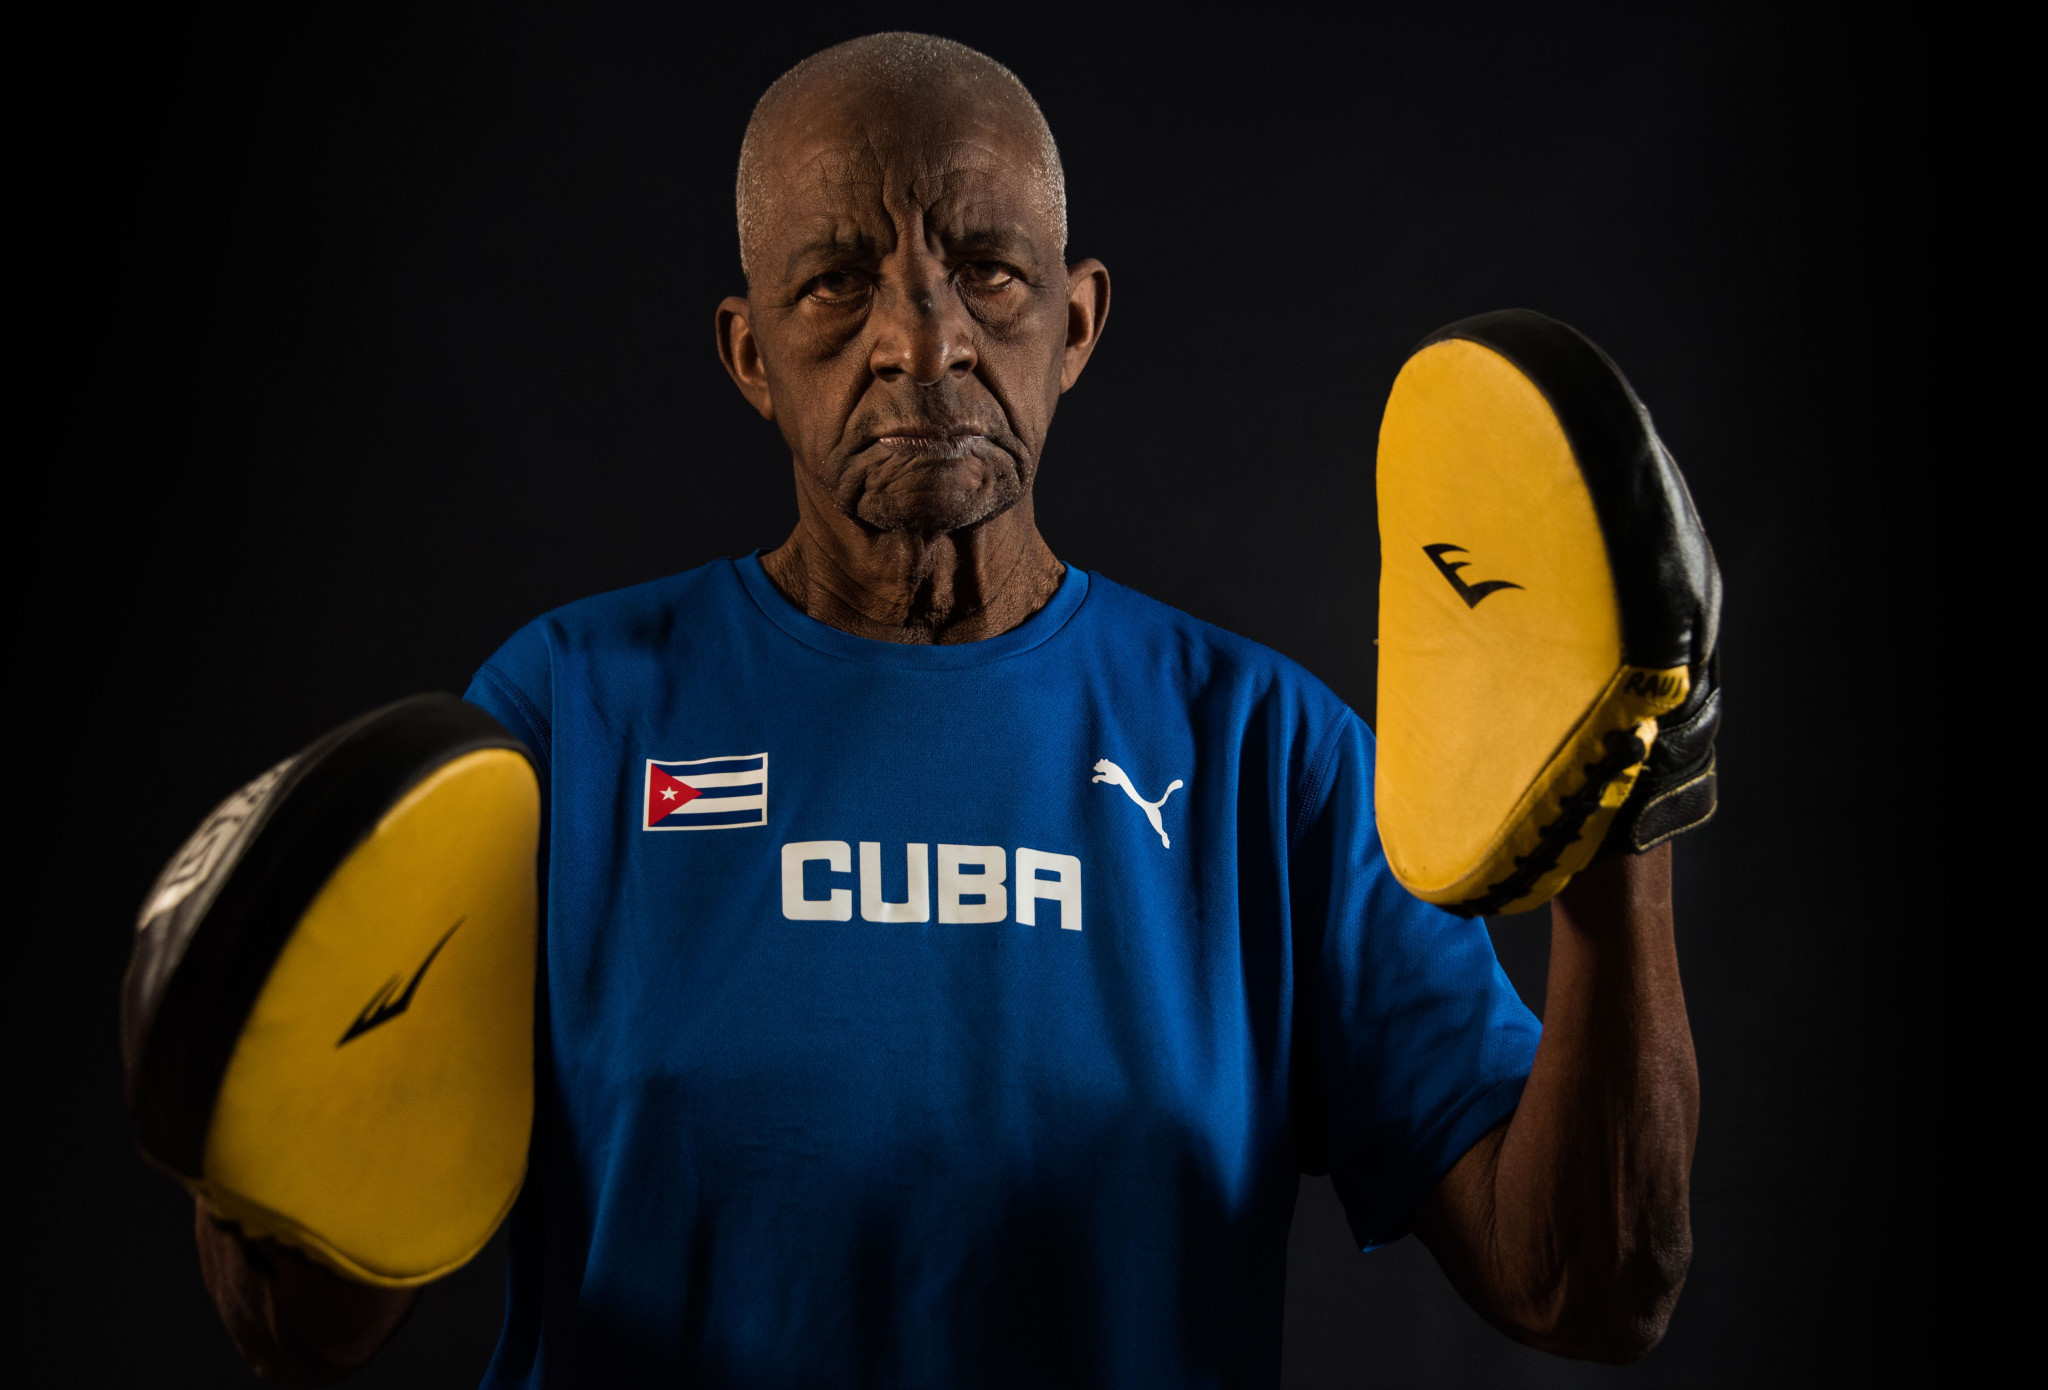 Legendary trainer Alcides Sagarra believes Cuba should have a women's boxing team ©Getty Images